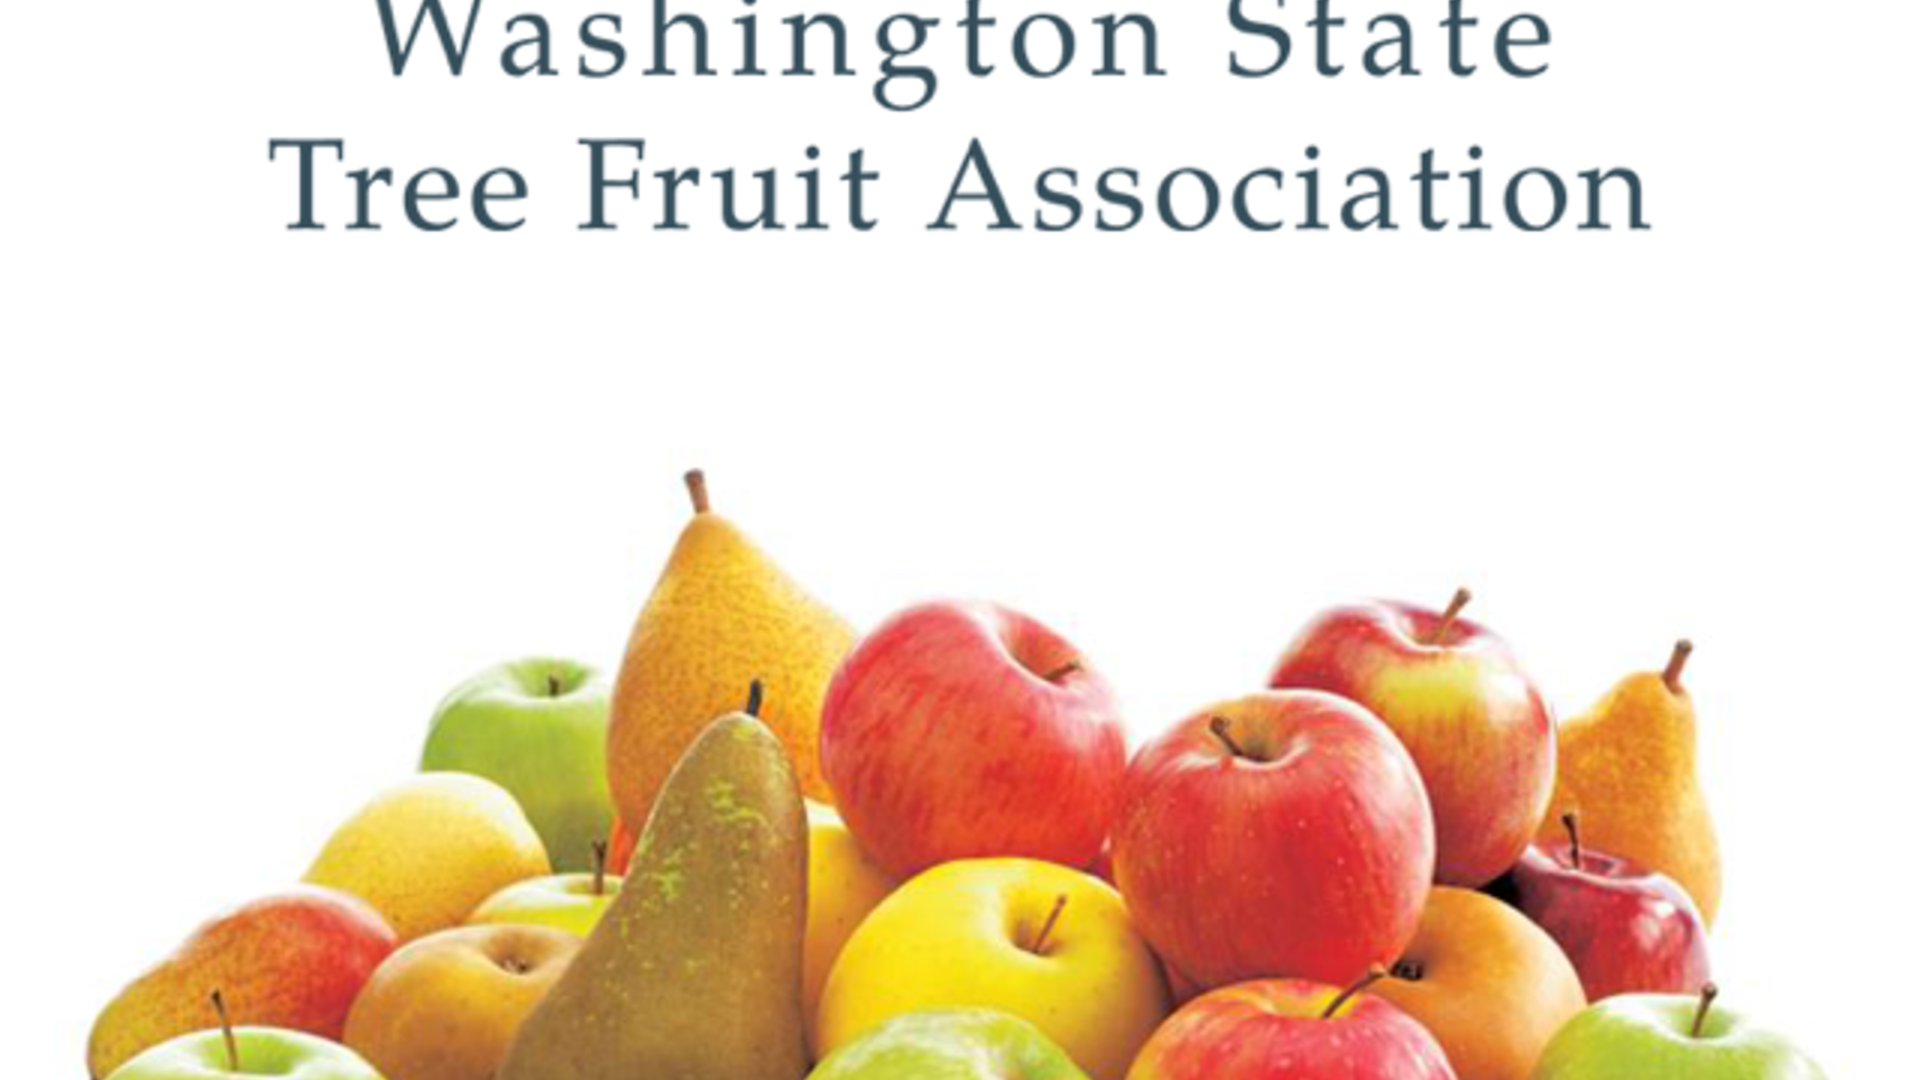 WA State Tree Fruit and Legislation Pt 1